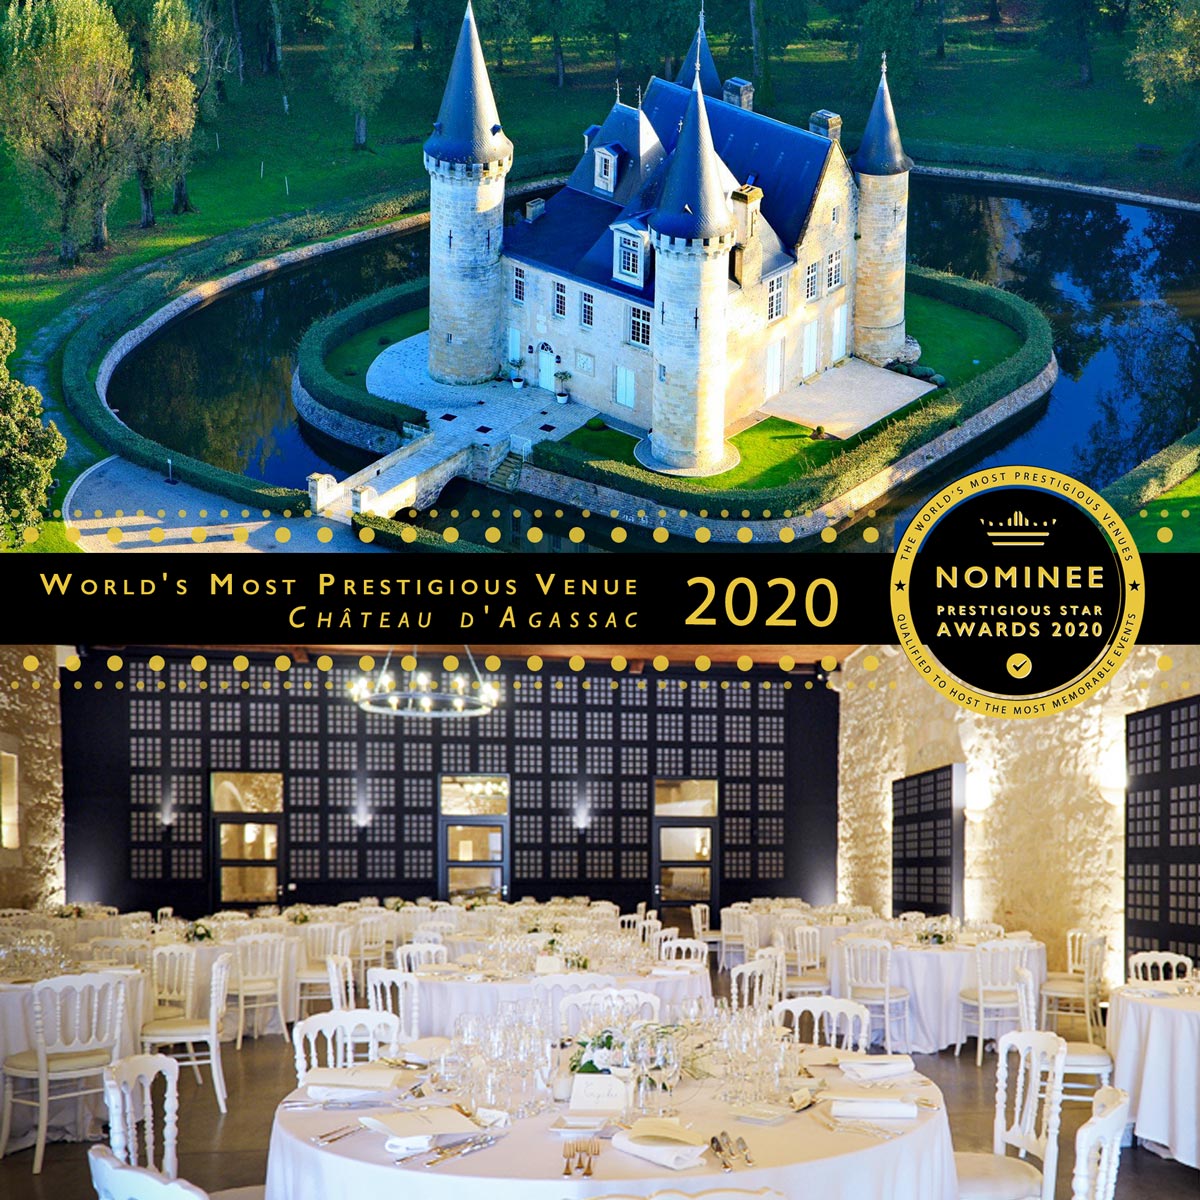 World's Most Prestigious Venue Nominee 2020, Chateau d'Agassac, Prestigious Star Awards